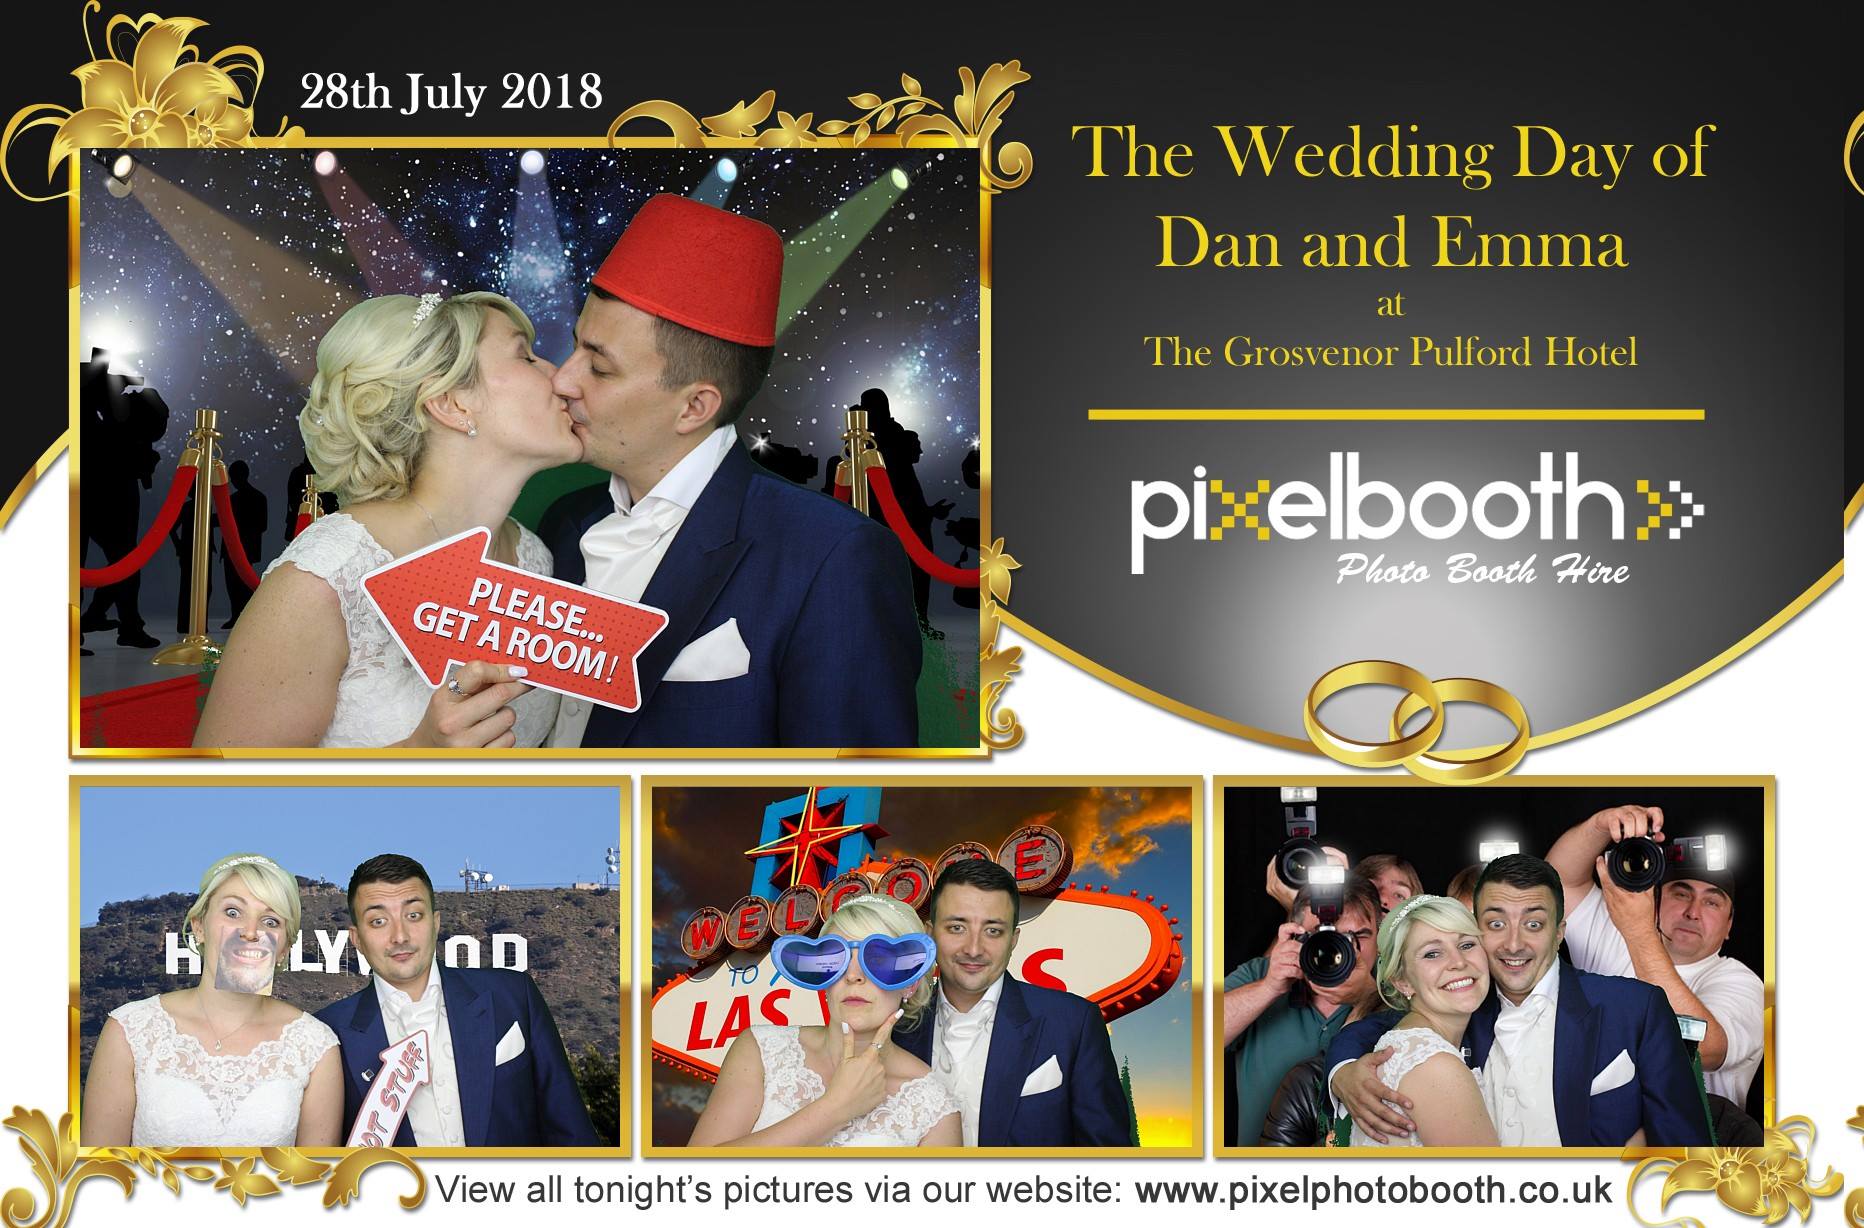 28th July 2018: Dan and Emma's Wedding at Grosvenor Pulford